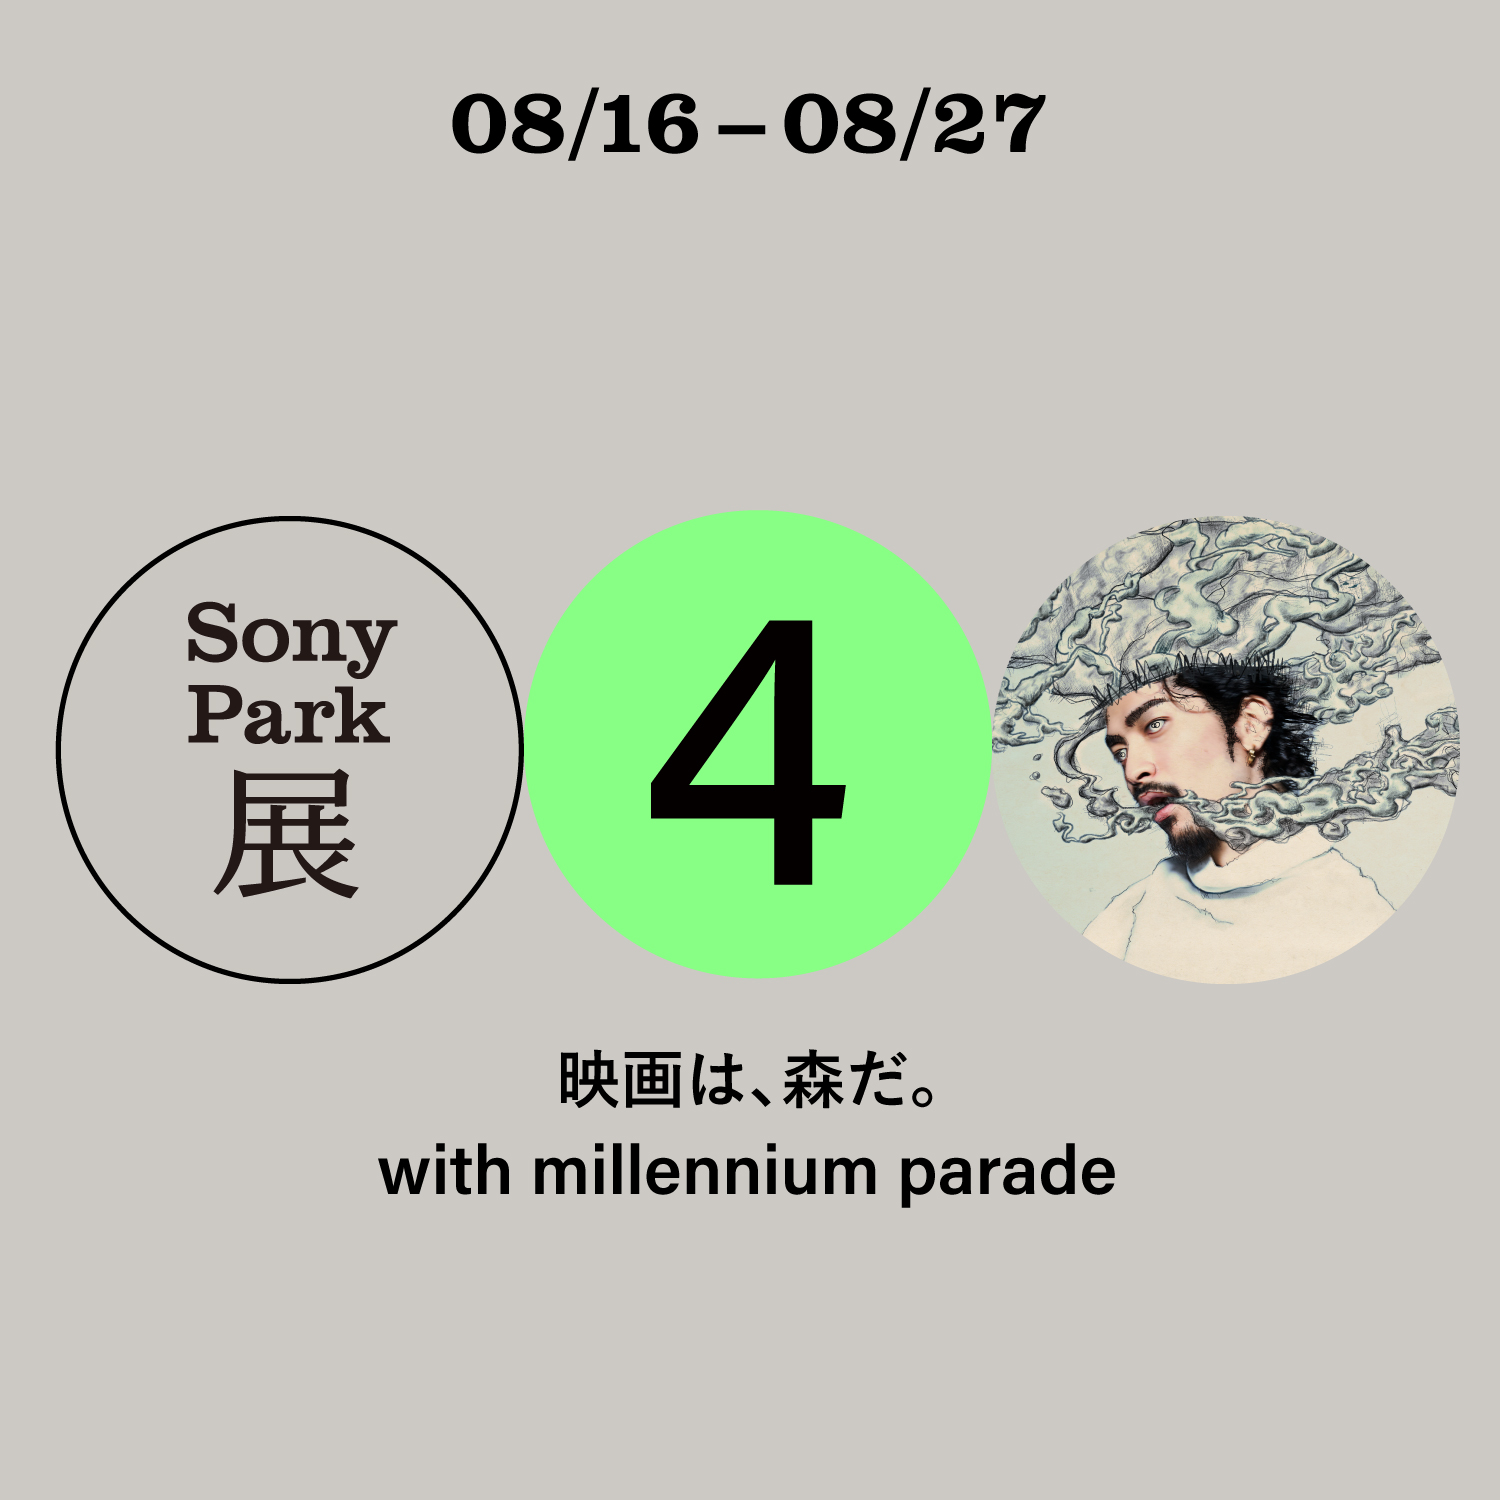 Sony Park Exhibition ④CINEMA with millennium parade